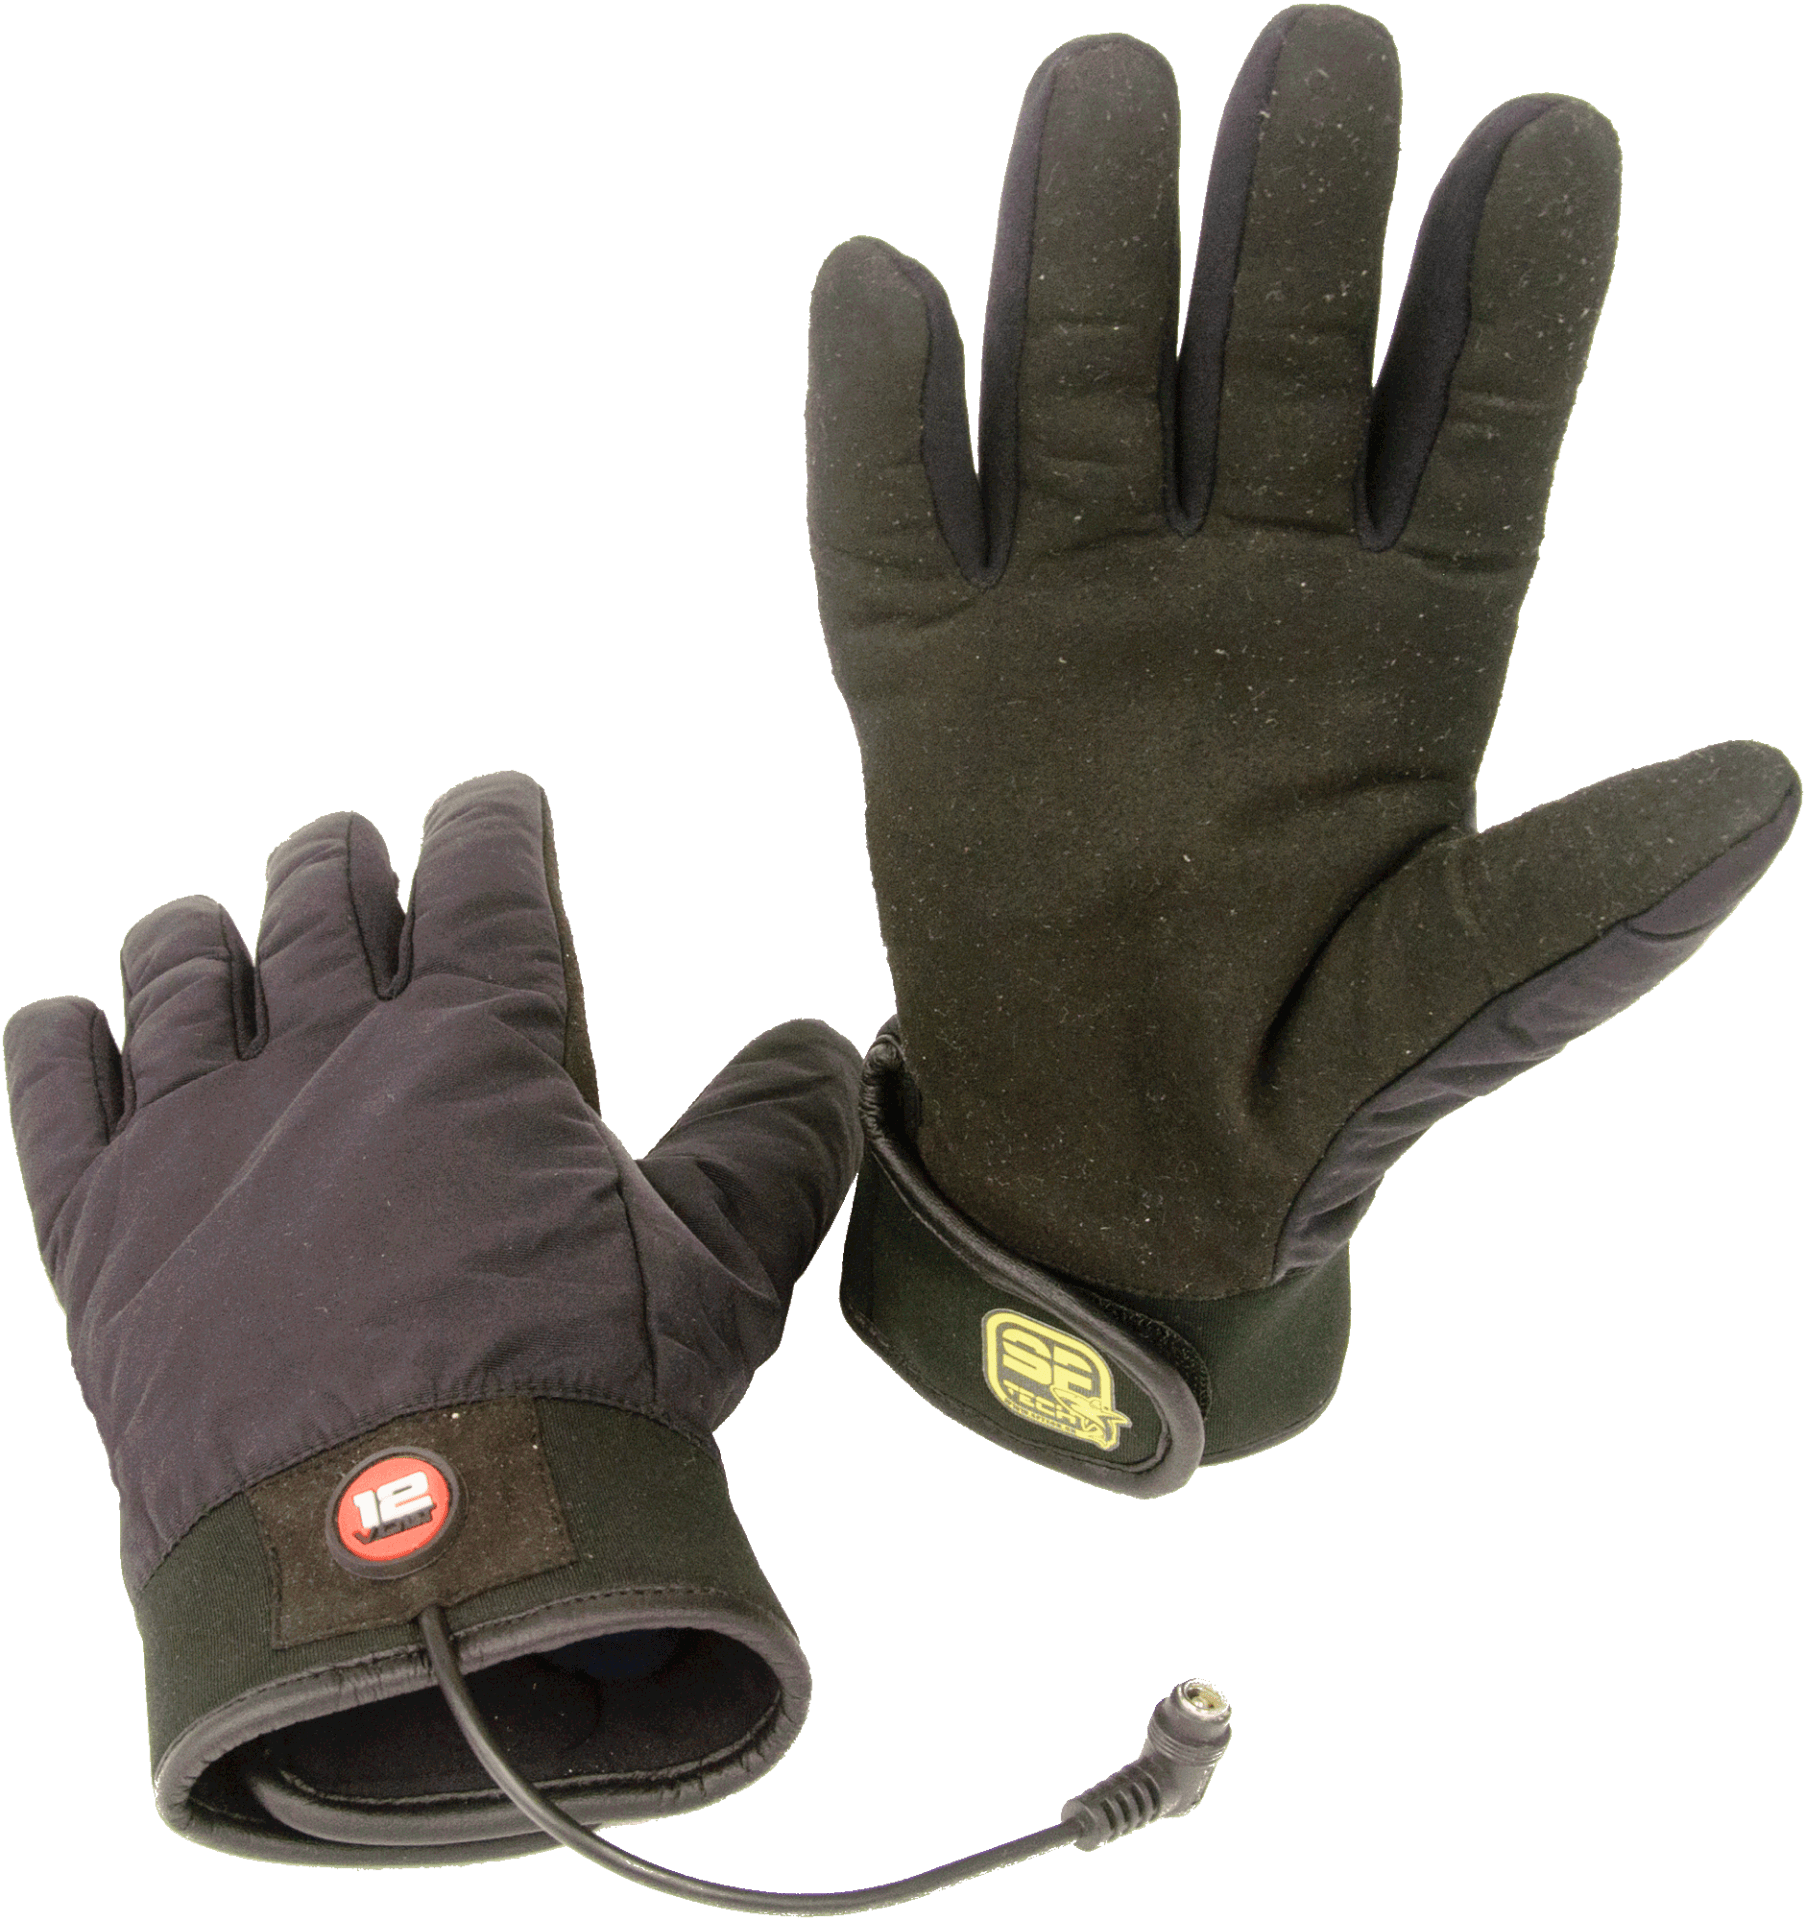 ACC.EXPO Heated Gloves - Waterproof